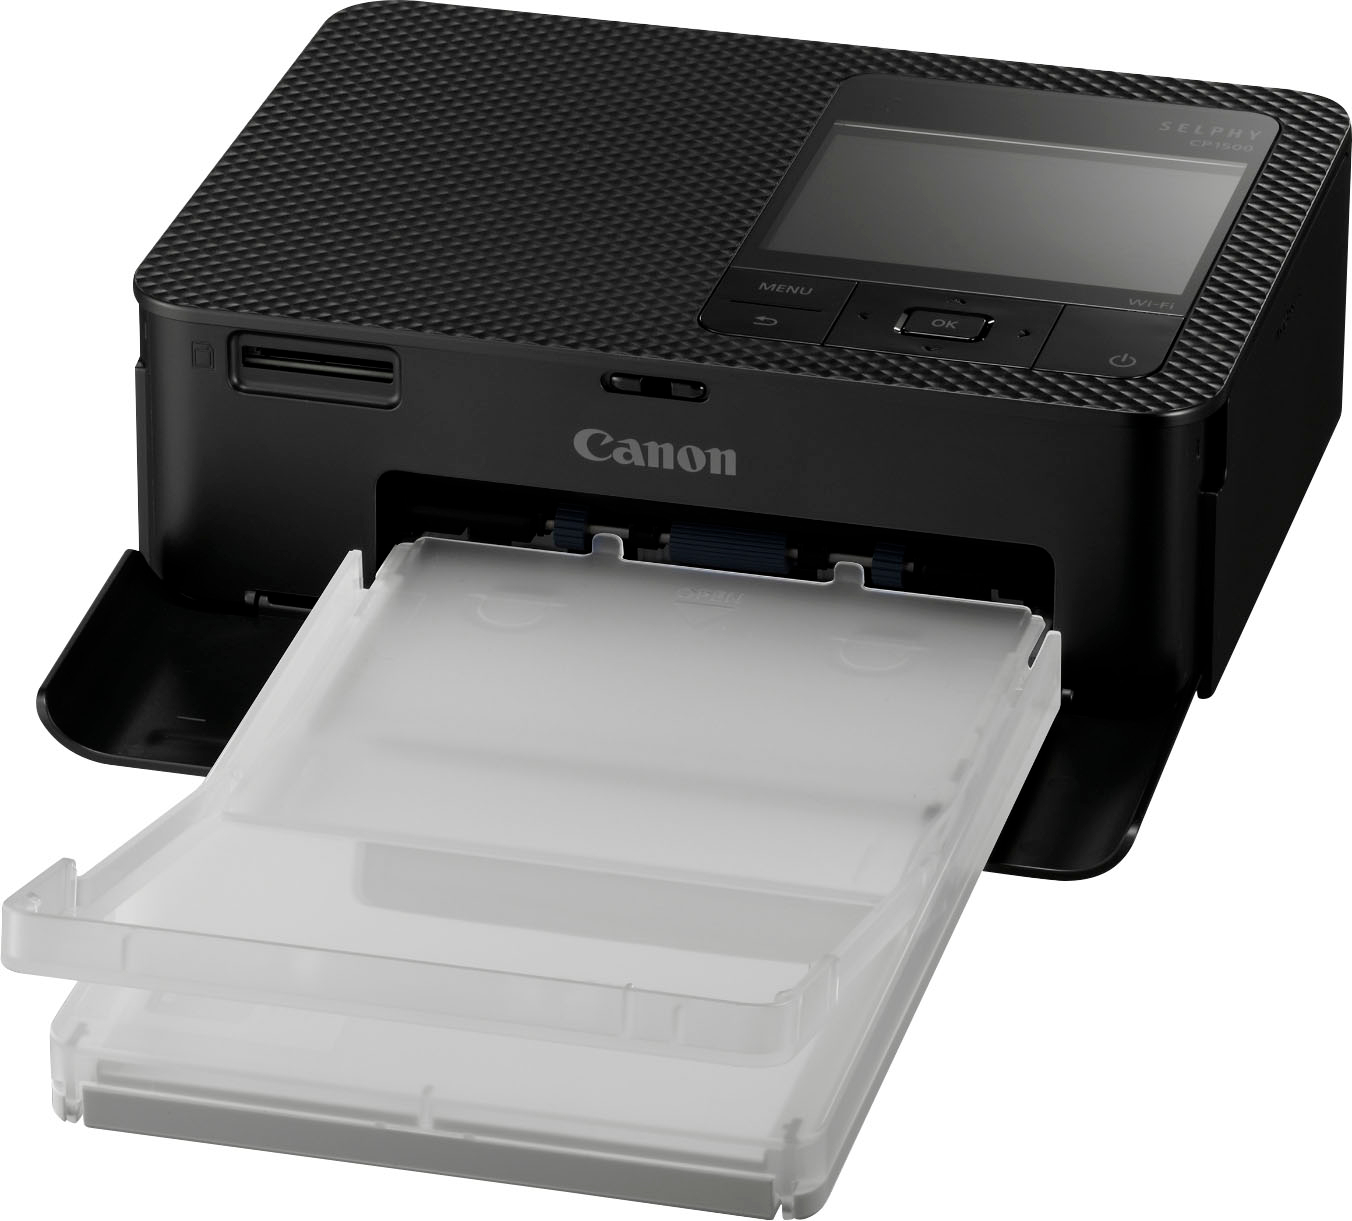 Canon Selphy CP1000 Photo Printer - dumotech_international